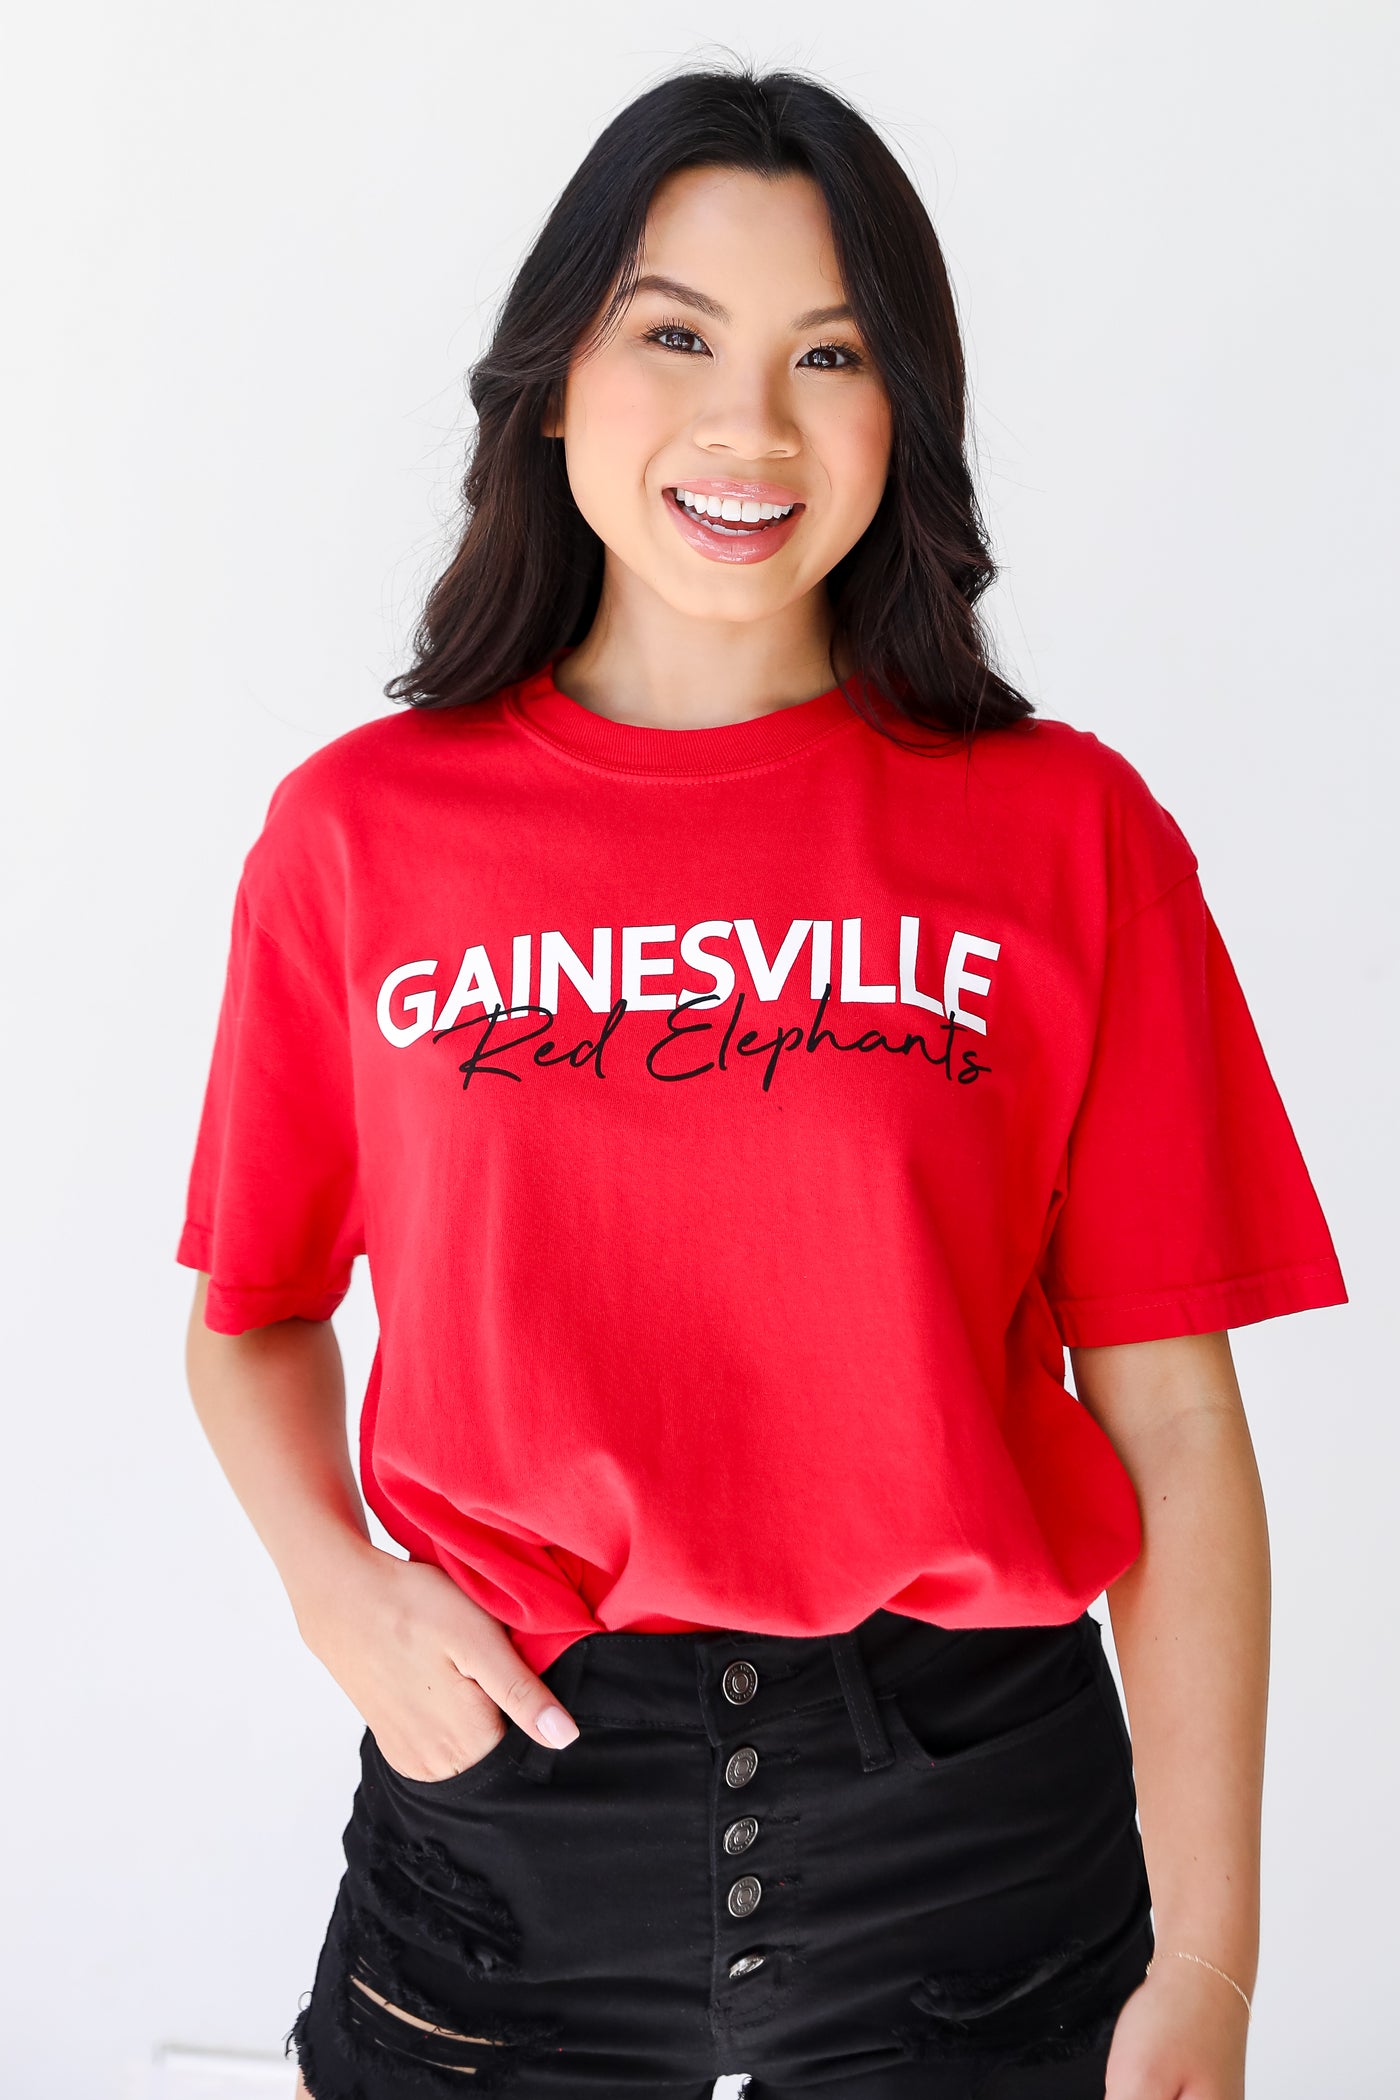 Gainesville Red Elephants Tee